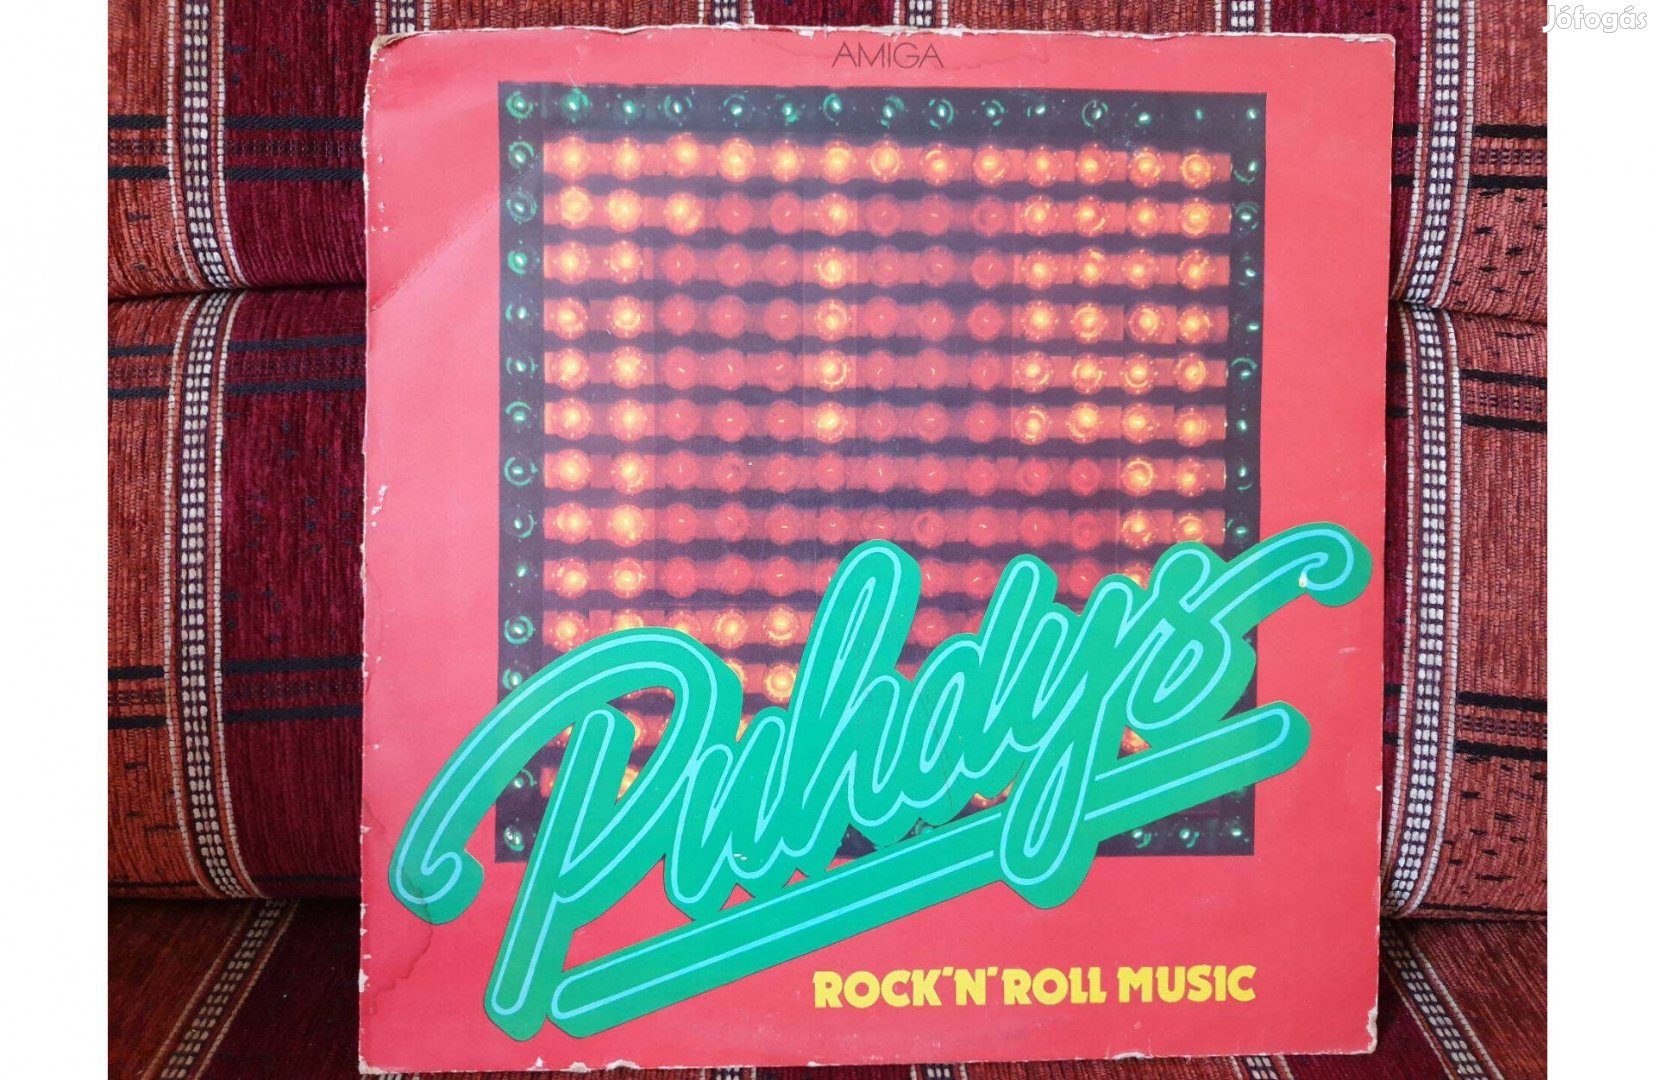 Puhdys - Rock 'N' Roll Music hanglemez bakelit lemez Vinyl